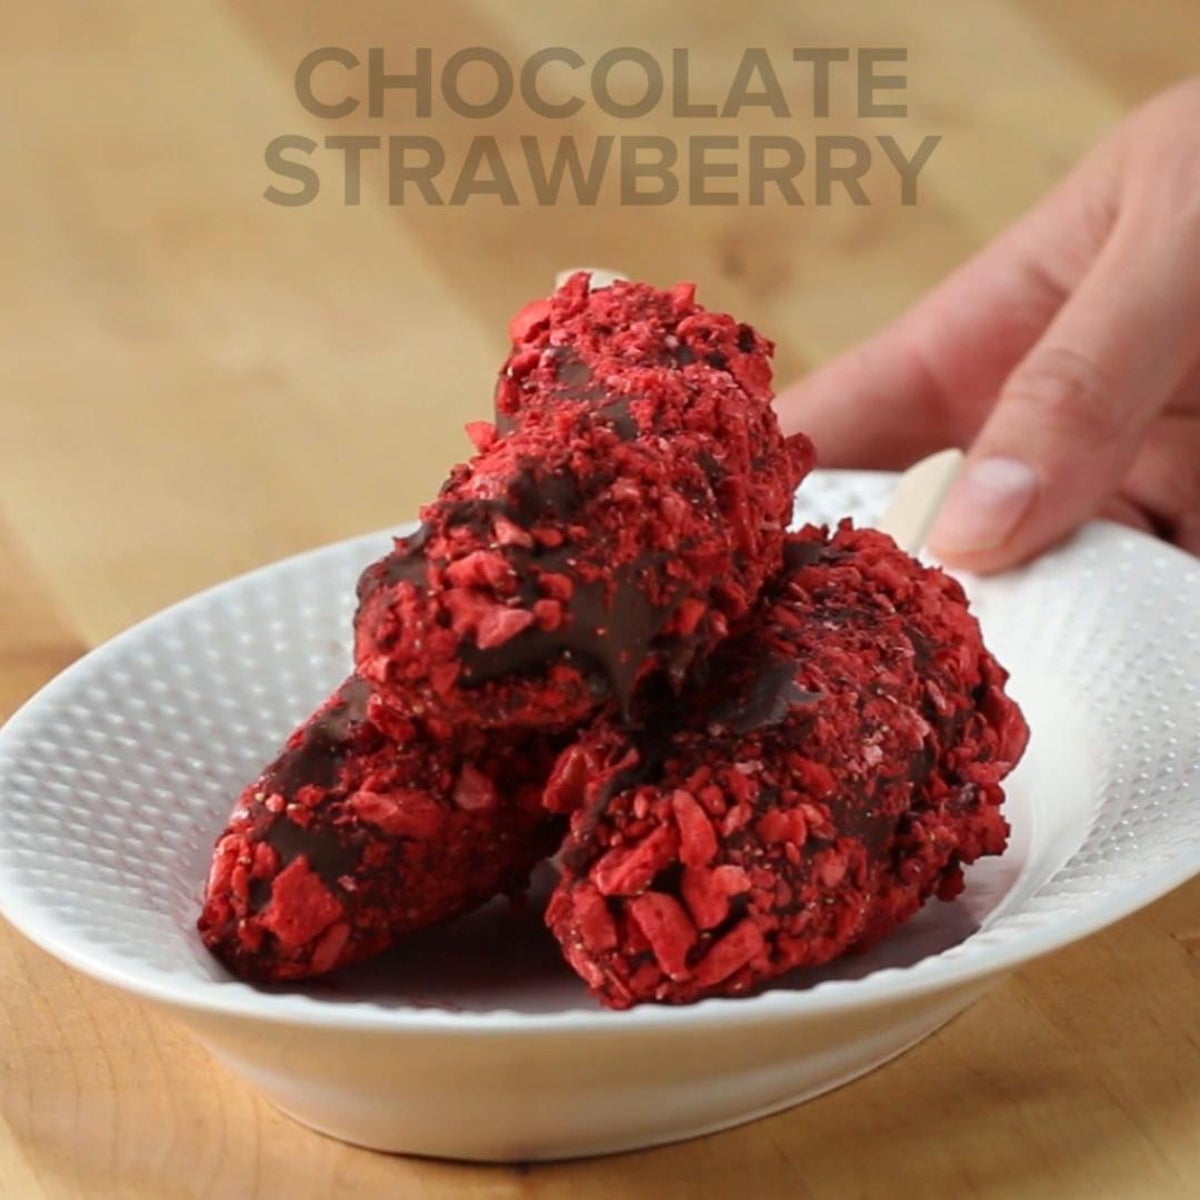 Chocolate Strawberry Frozen Banana Recipe by Tasty image